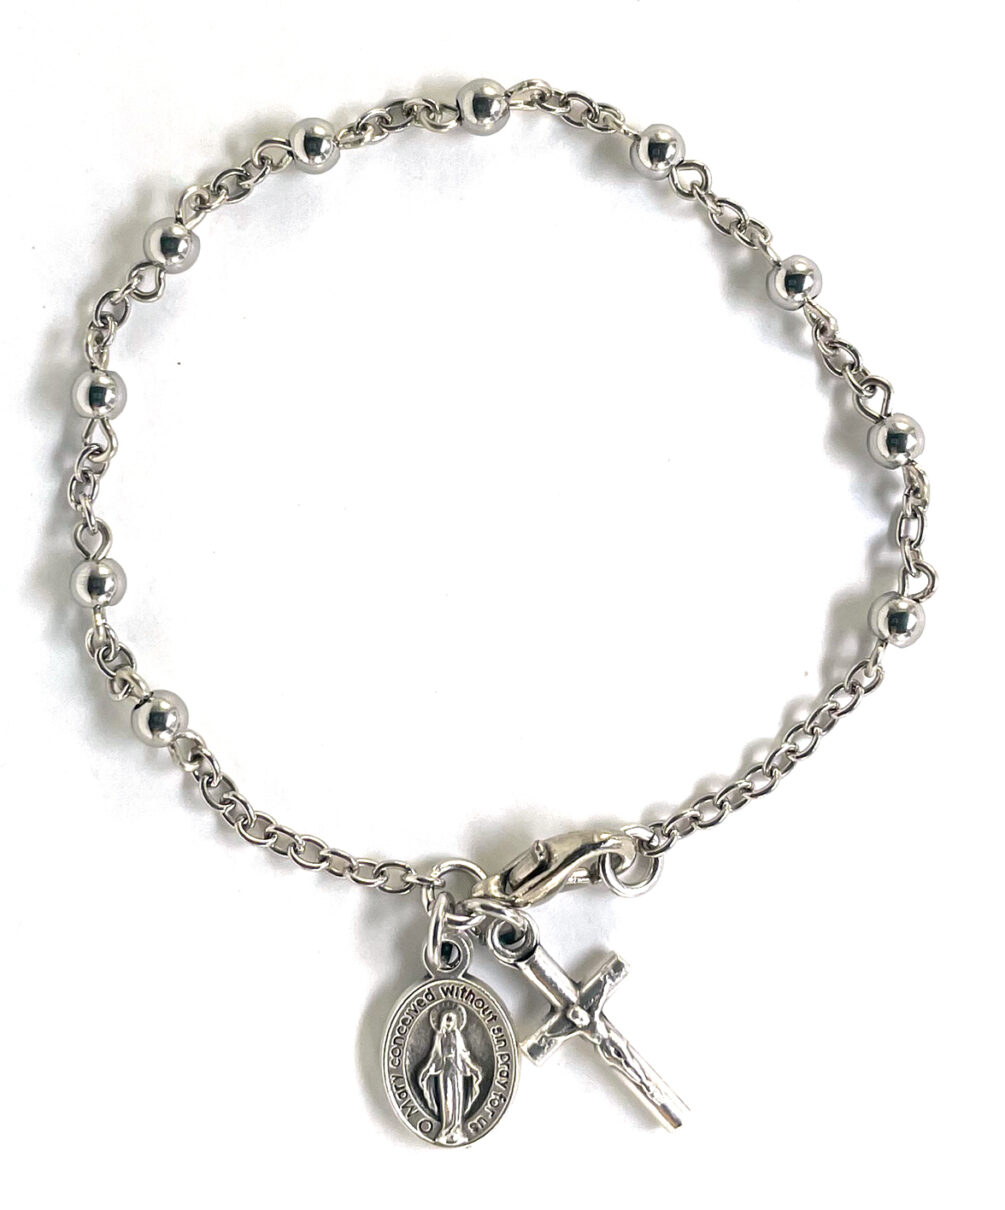 Delicate & Pretty Rosary Bracelet ($11.99 CAD)